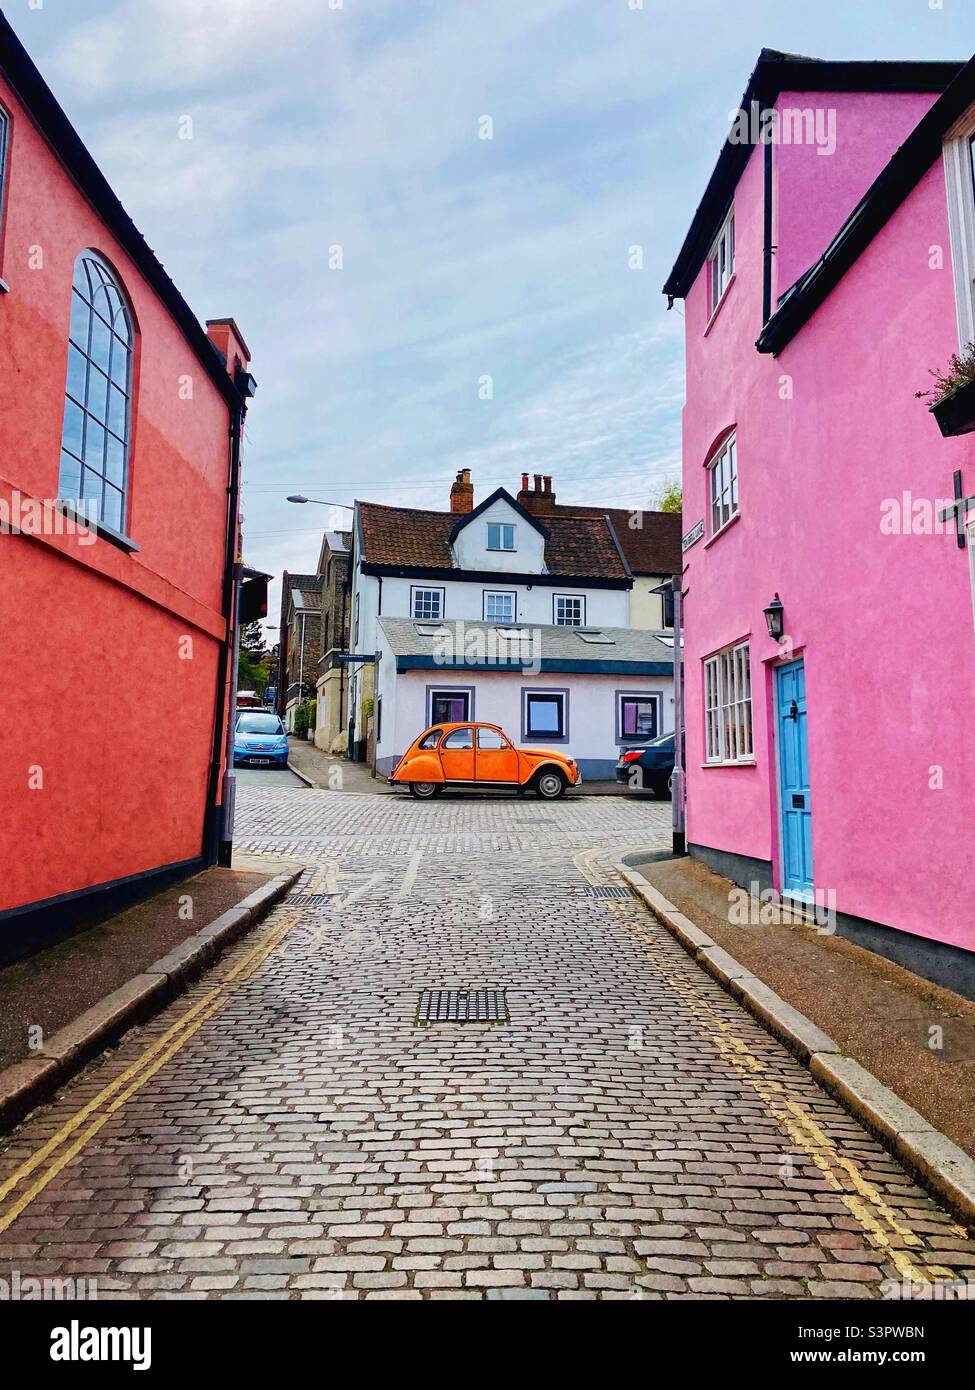 Colour Fix! Vivid orange Citroen 2CV parked on a street, pink houses, bright blue door, double yellow lines. Ten Bell Lane, Norwich, UK Stock Photo